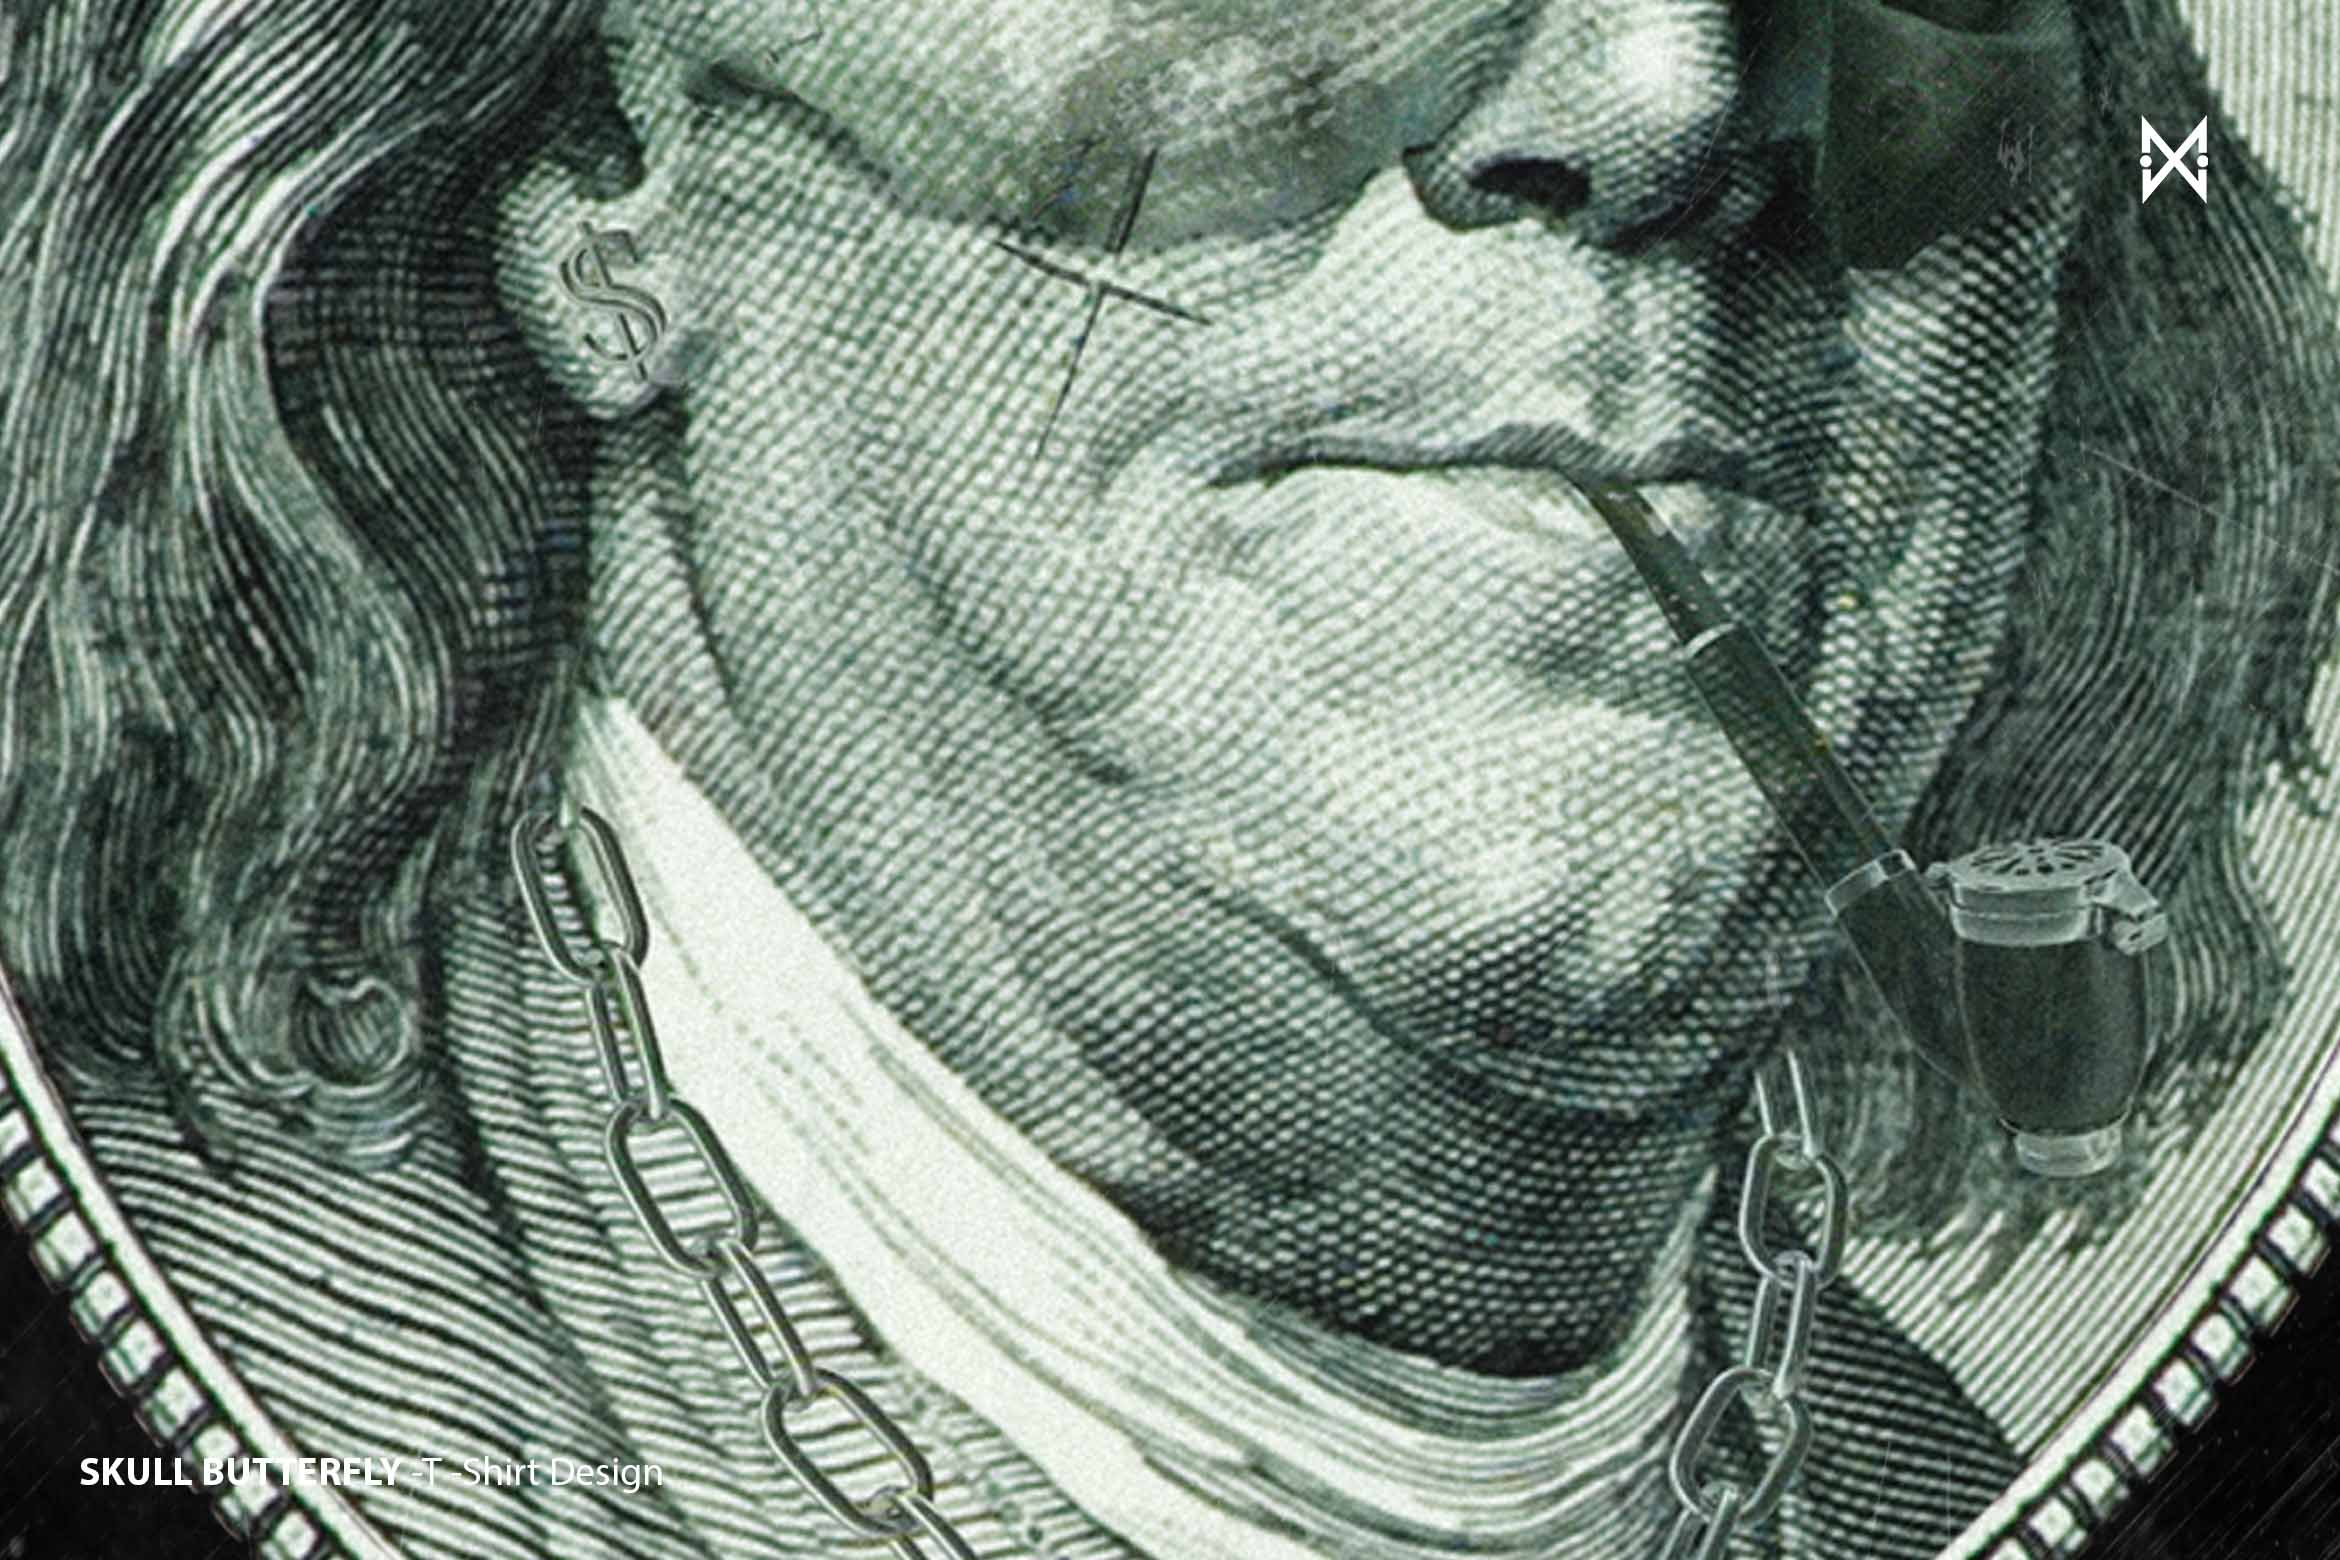 Irresistible image with Benjamin Franklin.